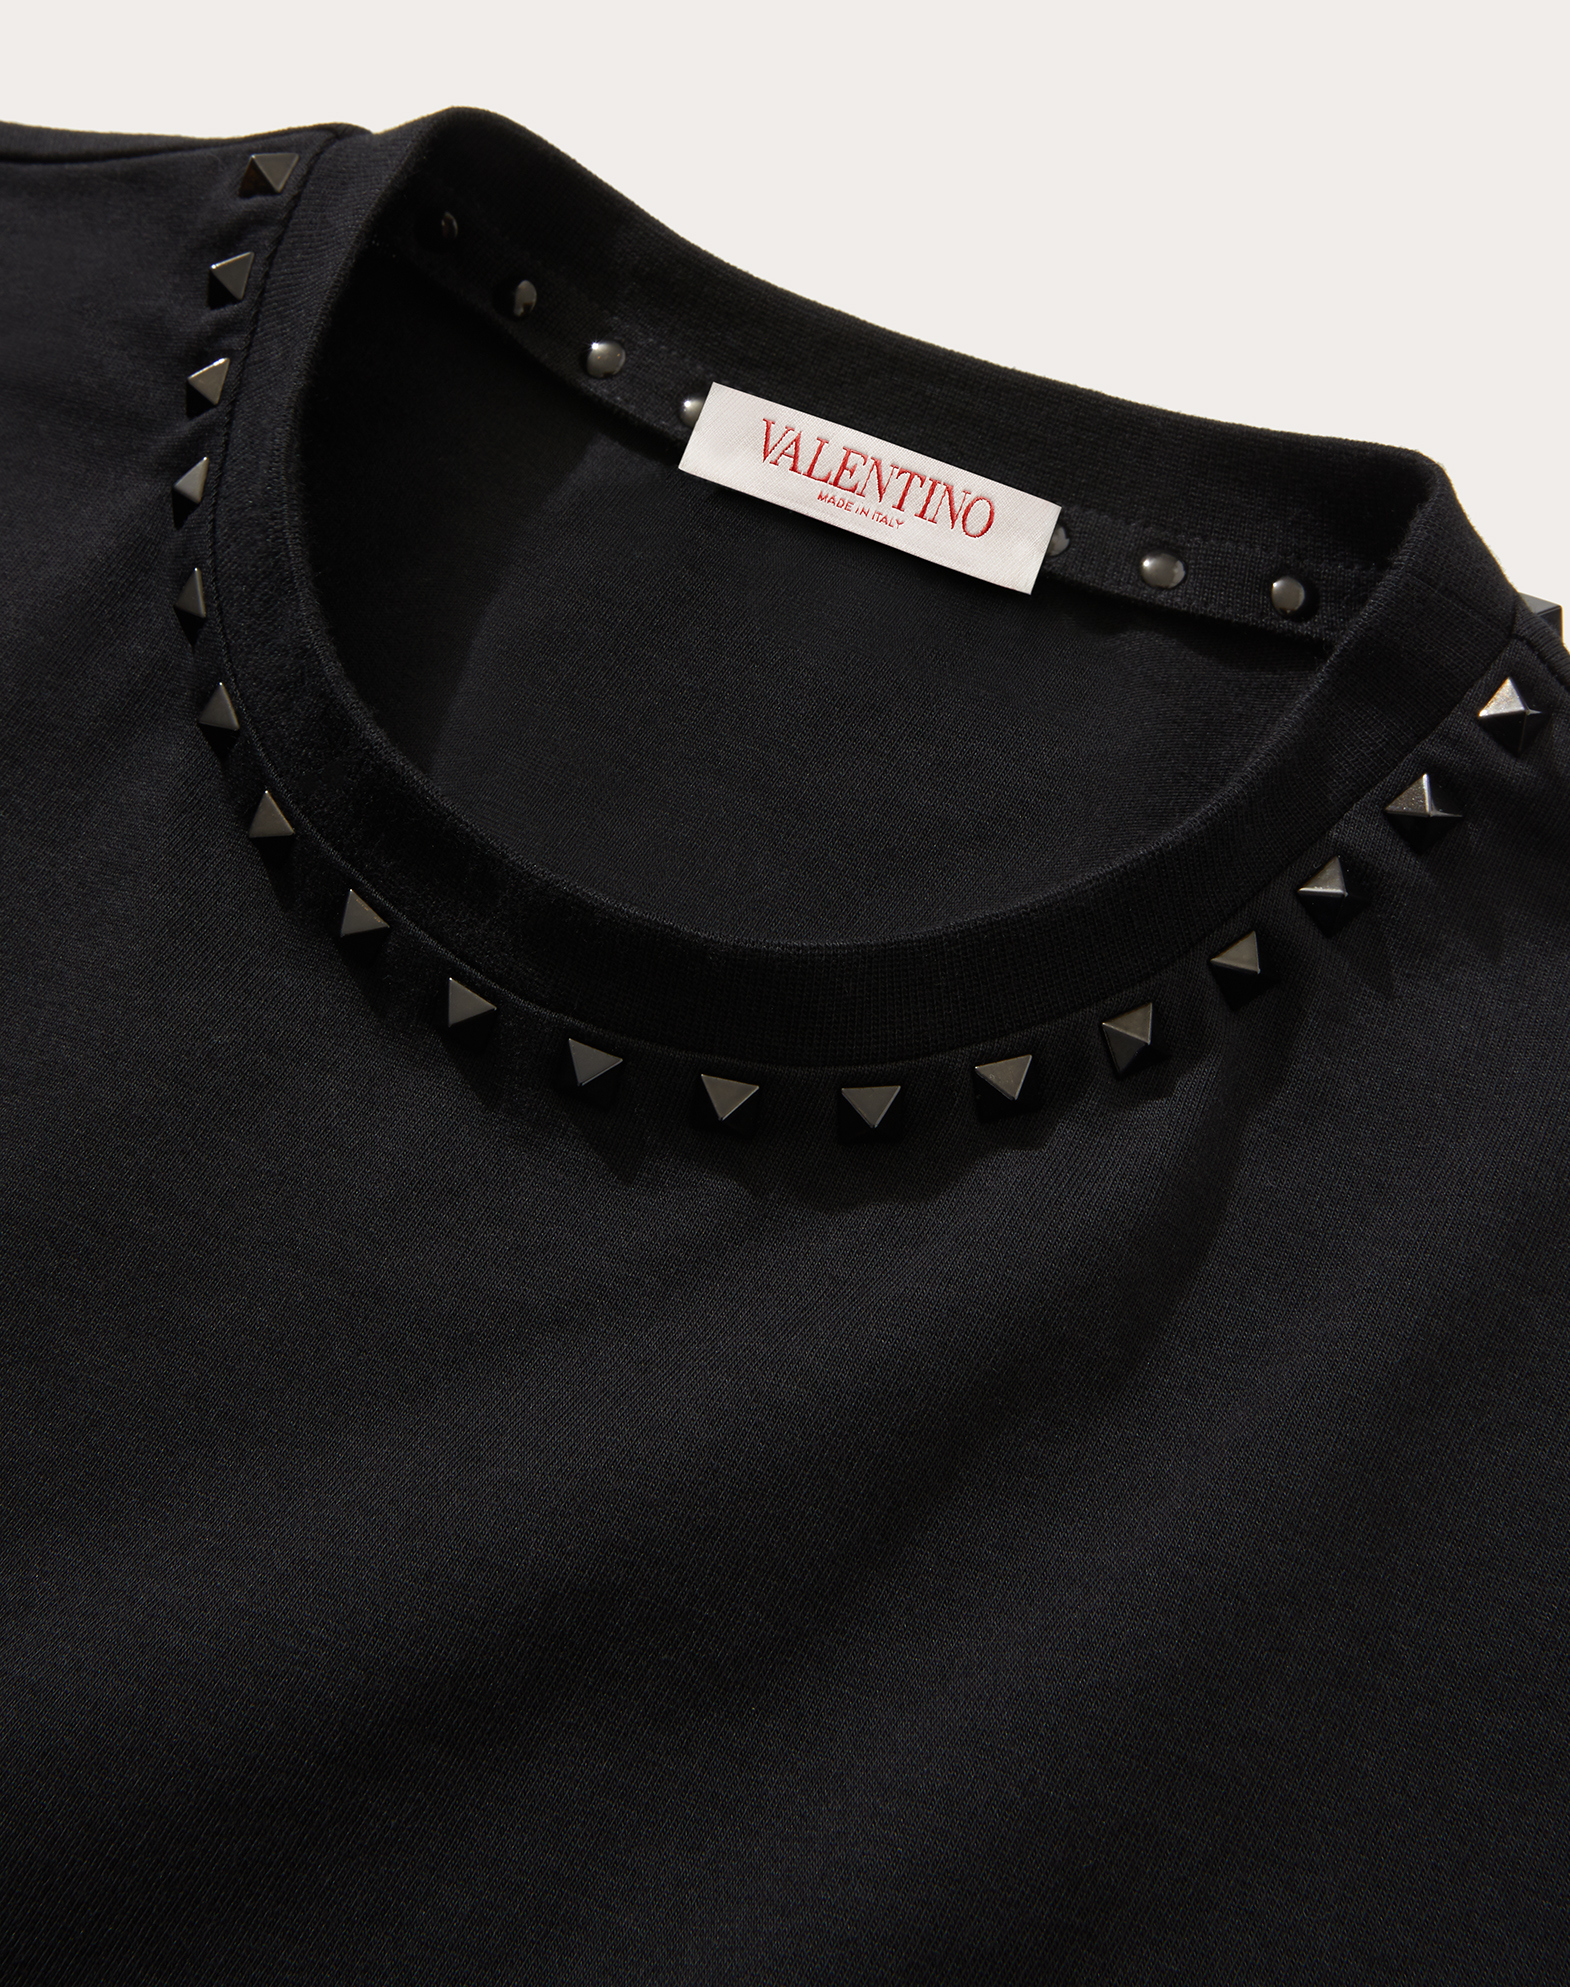 Valentino华伦天奴男士黑色BLACK UNTITLED铆钉棉质圆领T恤|Valentino 